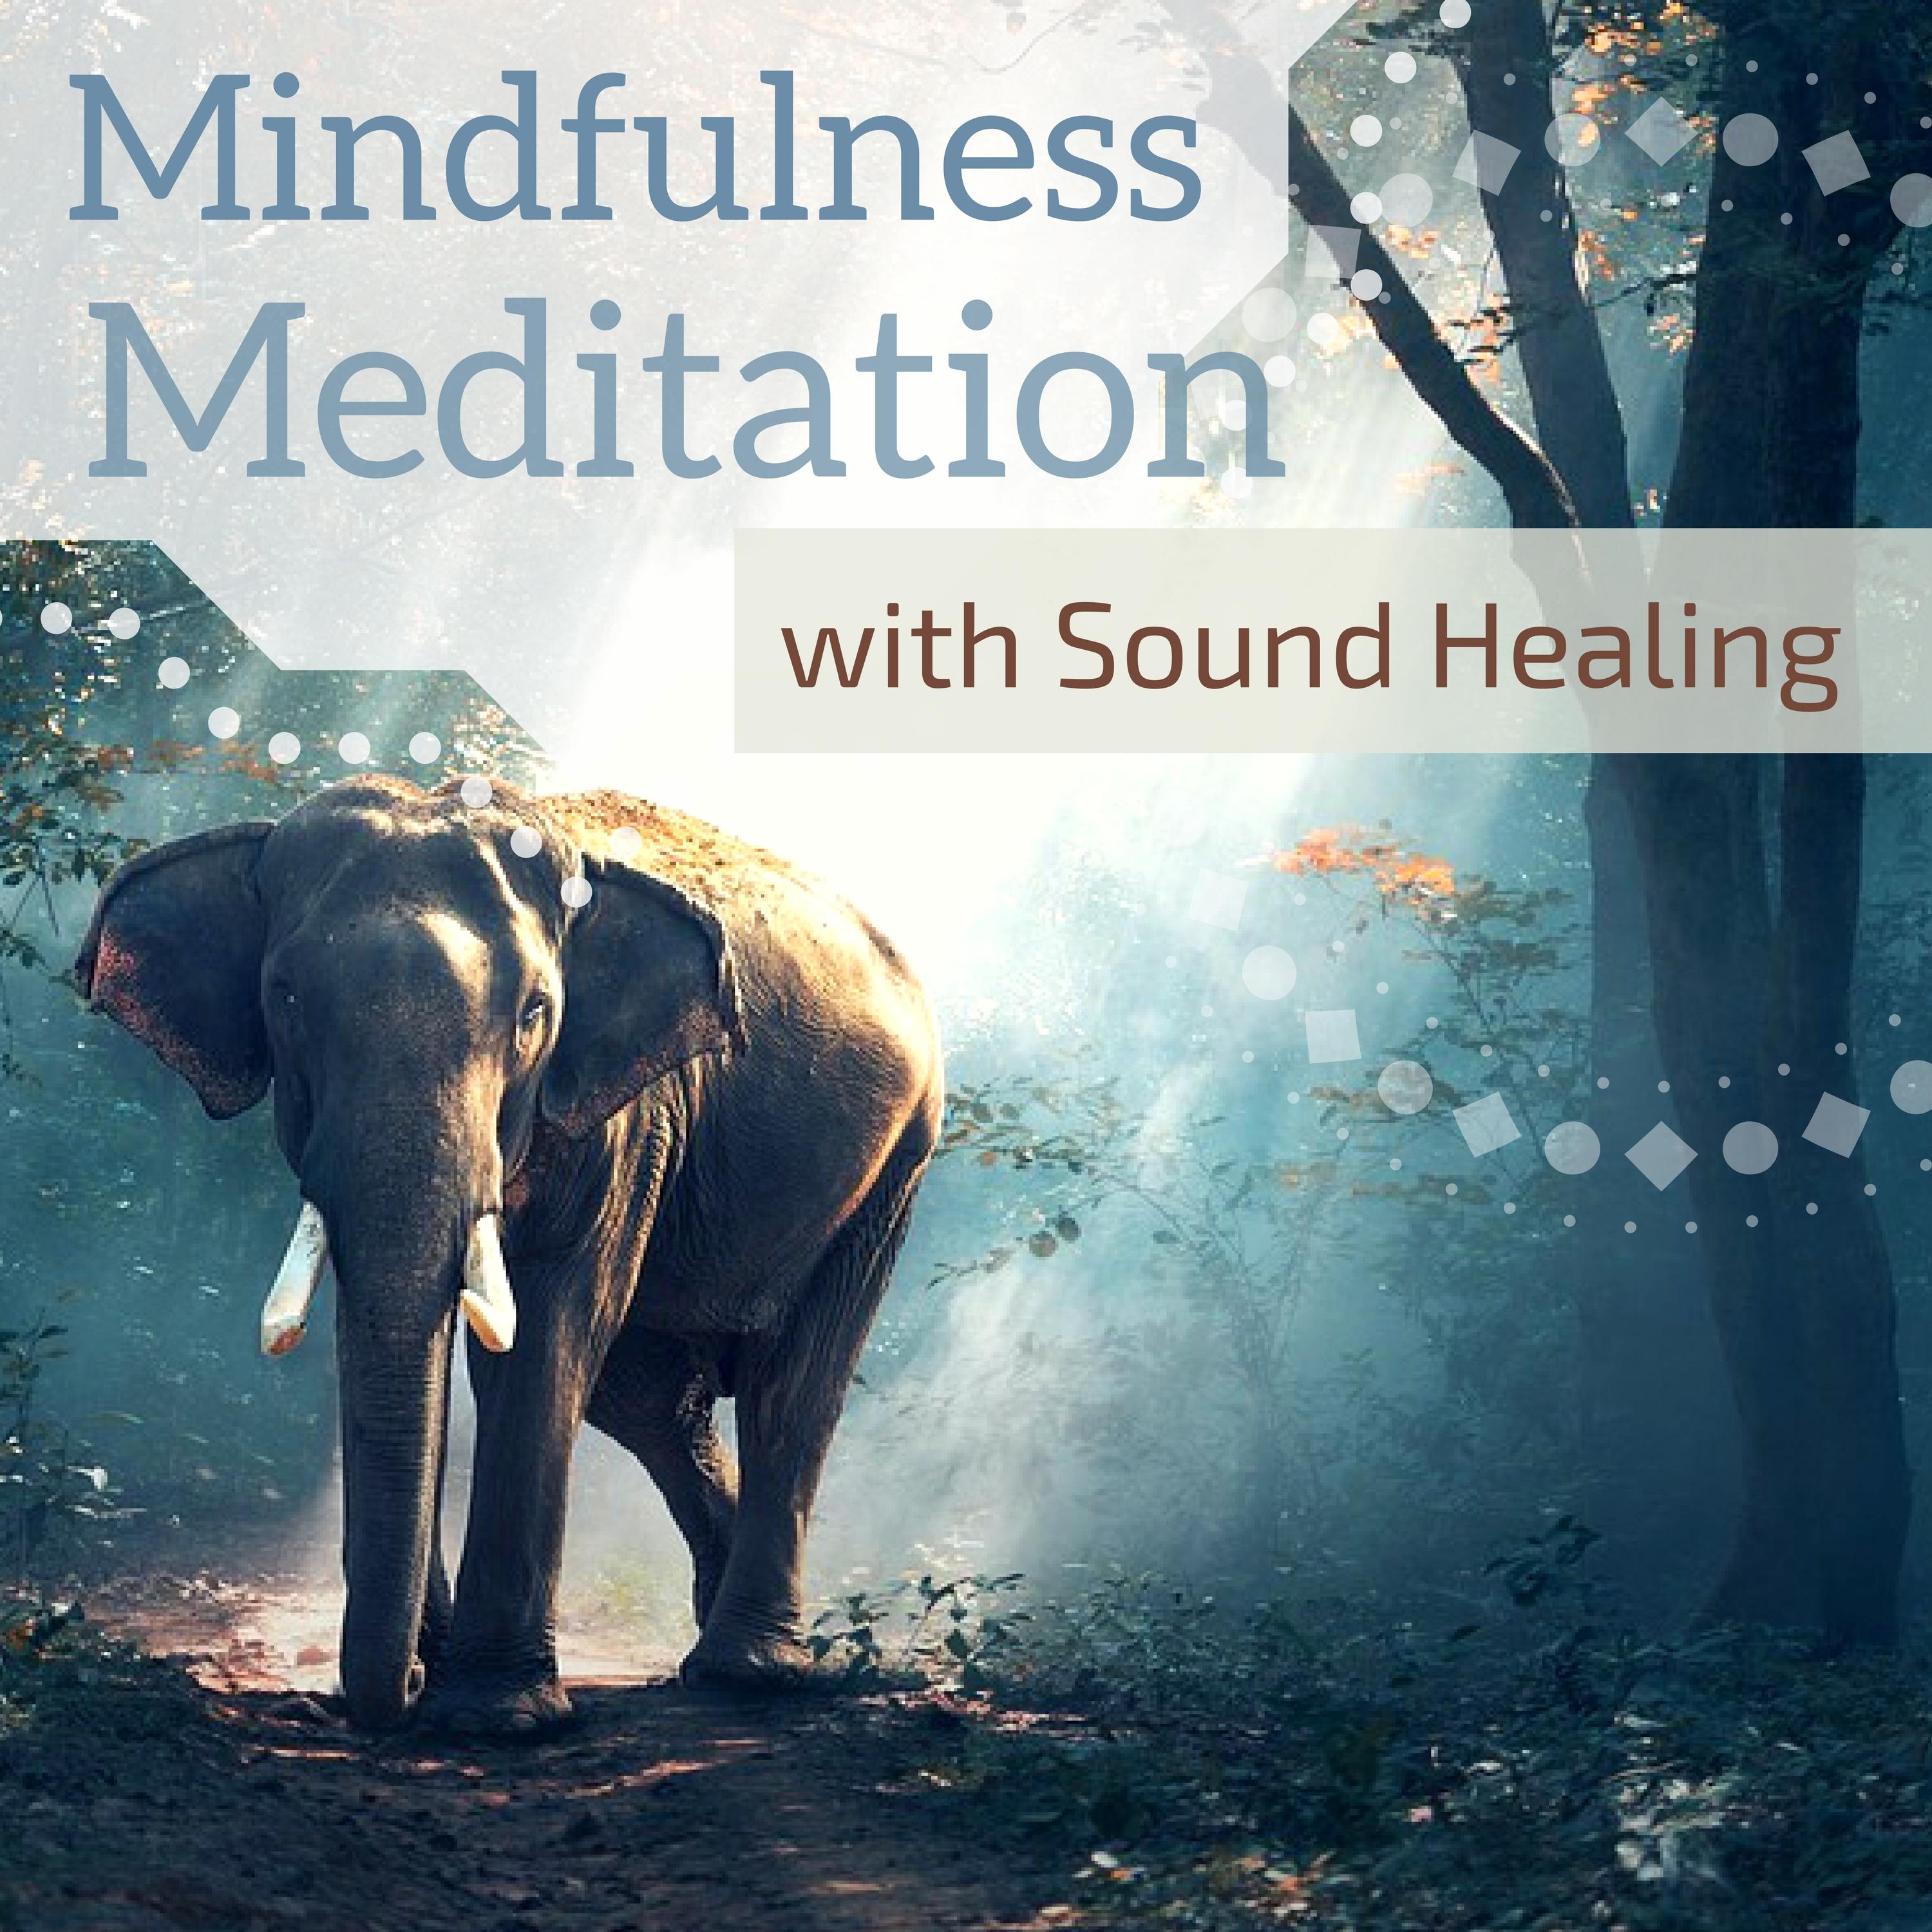 Mindfulness Meditation with Sound Healing